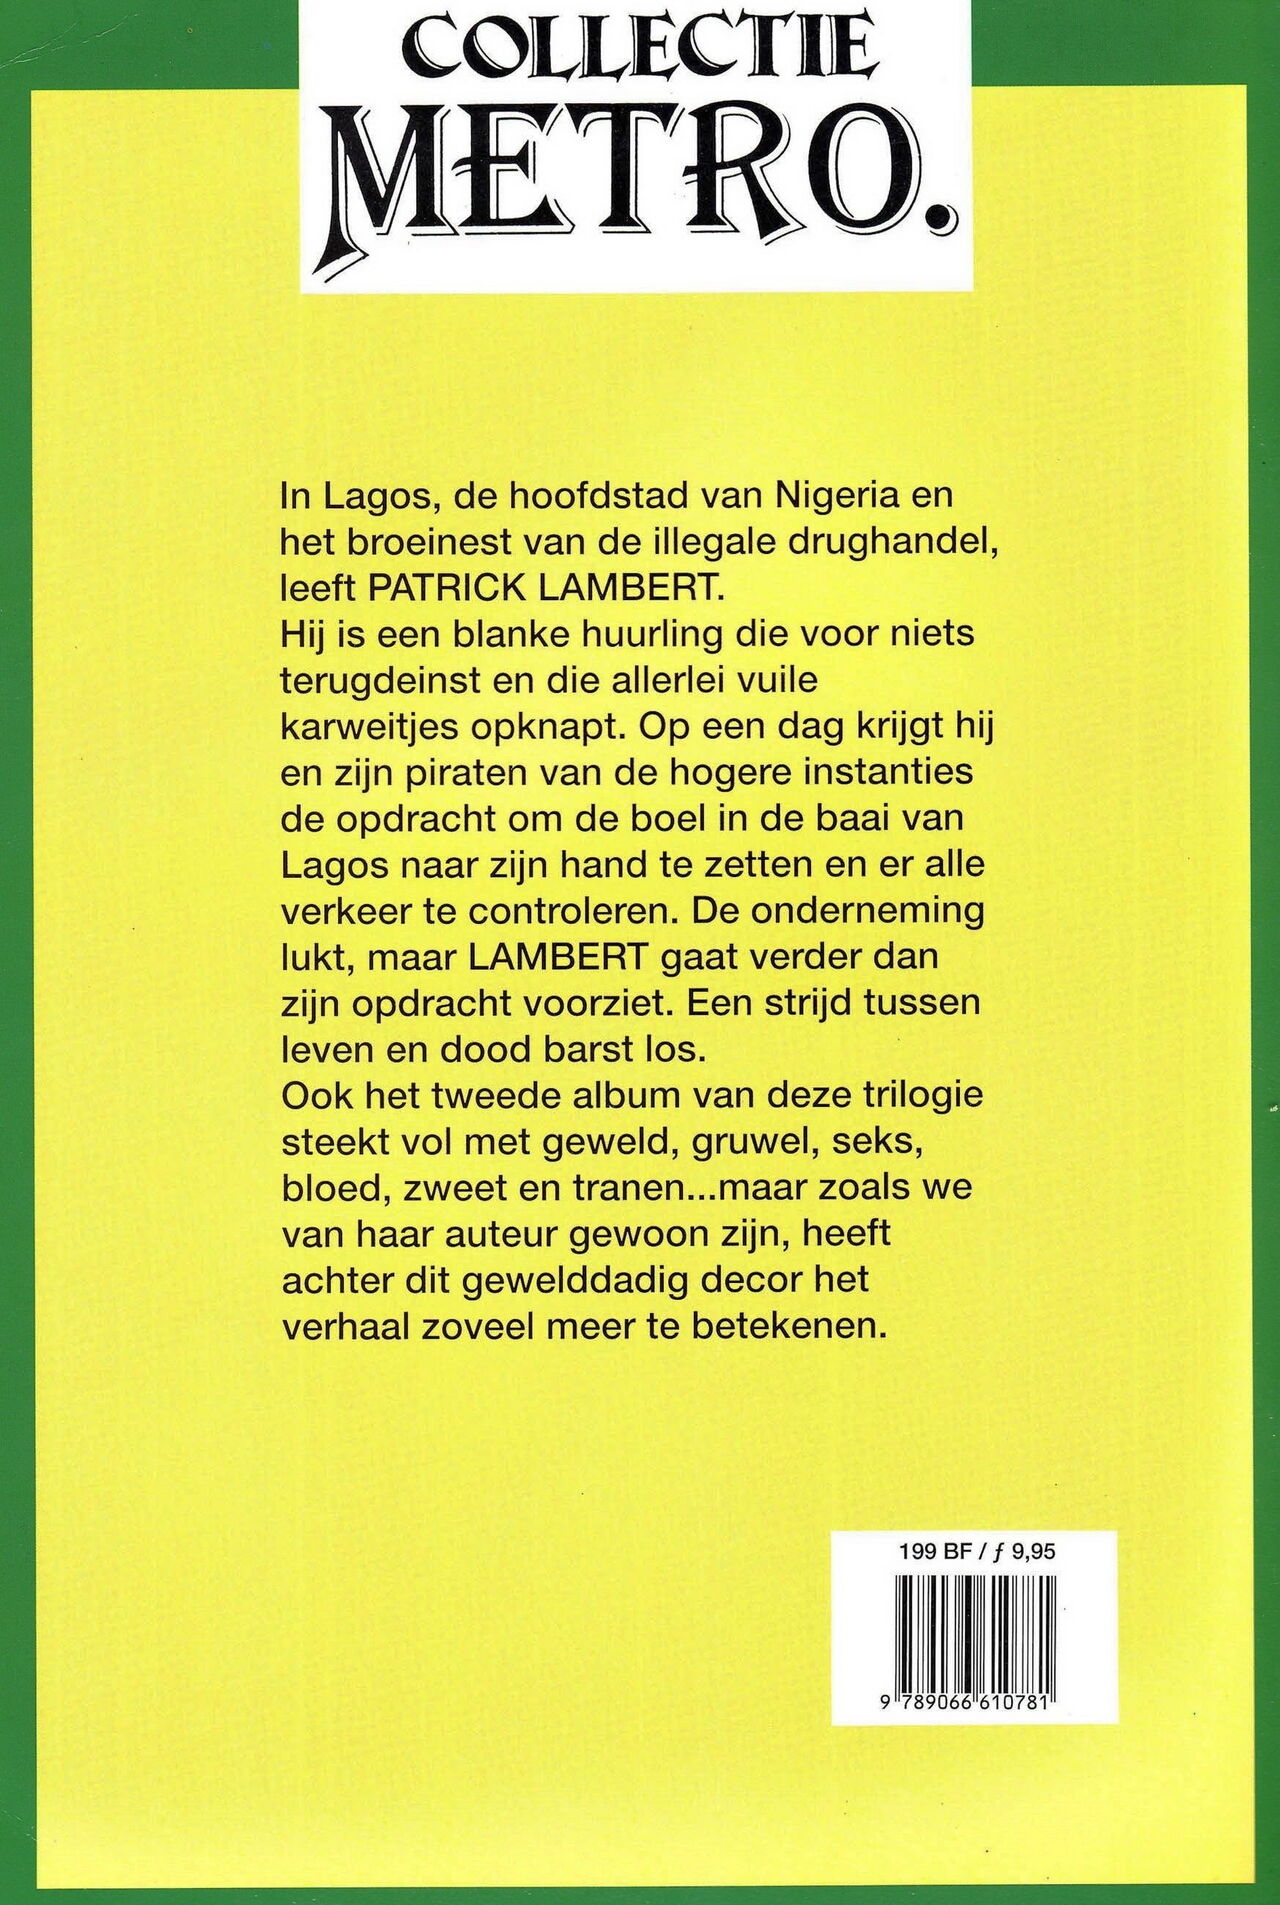 Schultheiss - De Droom van de Haai 2 - Lagos Connection (Dutch) 48